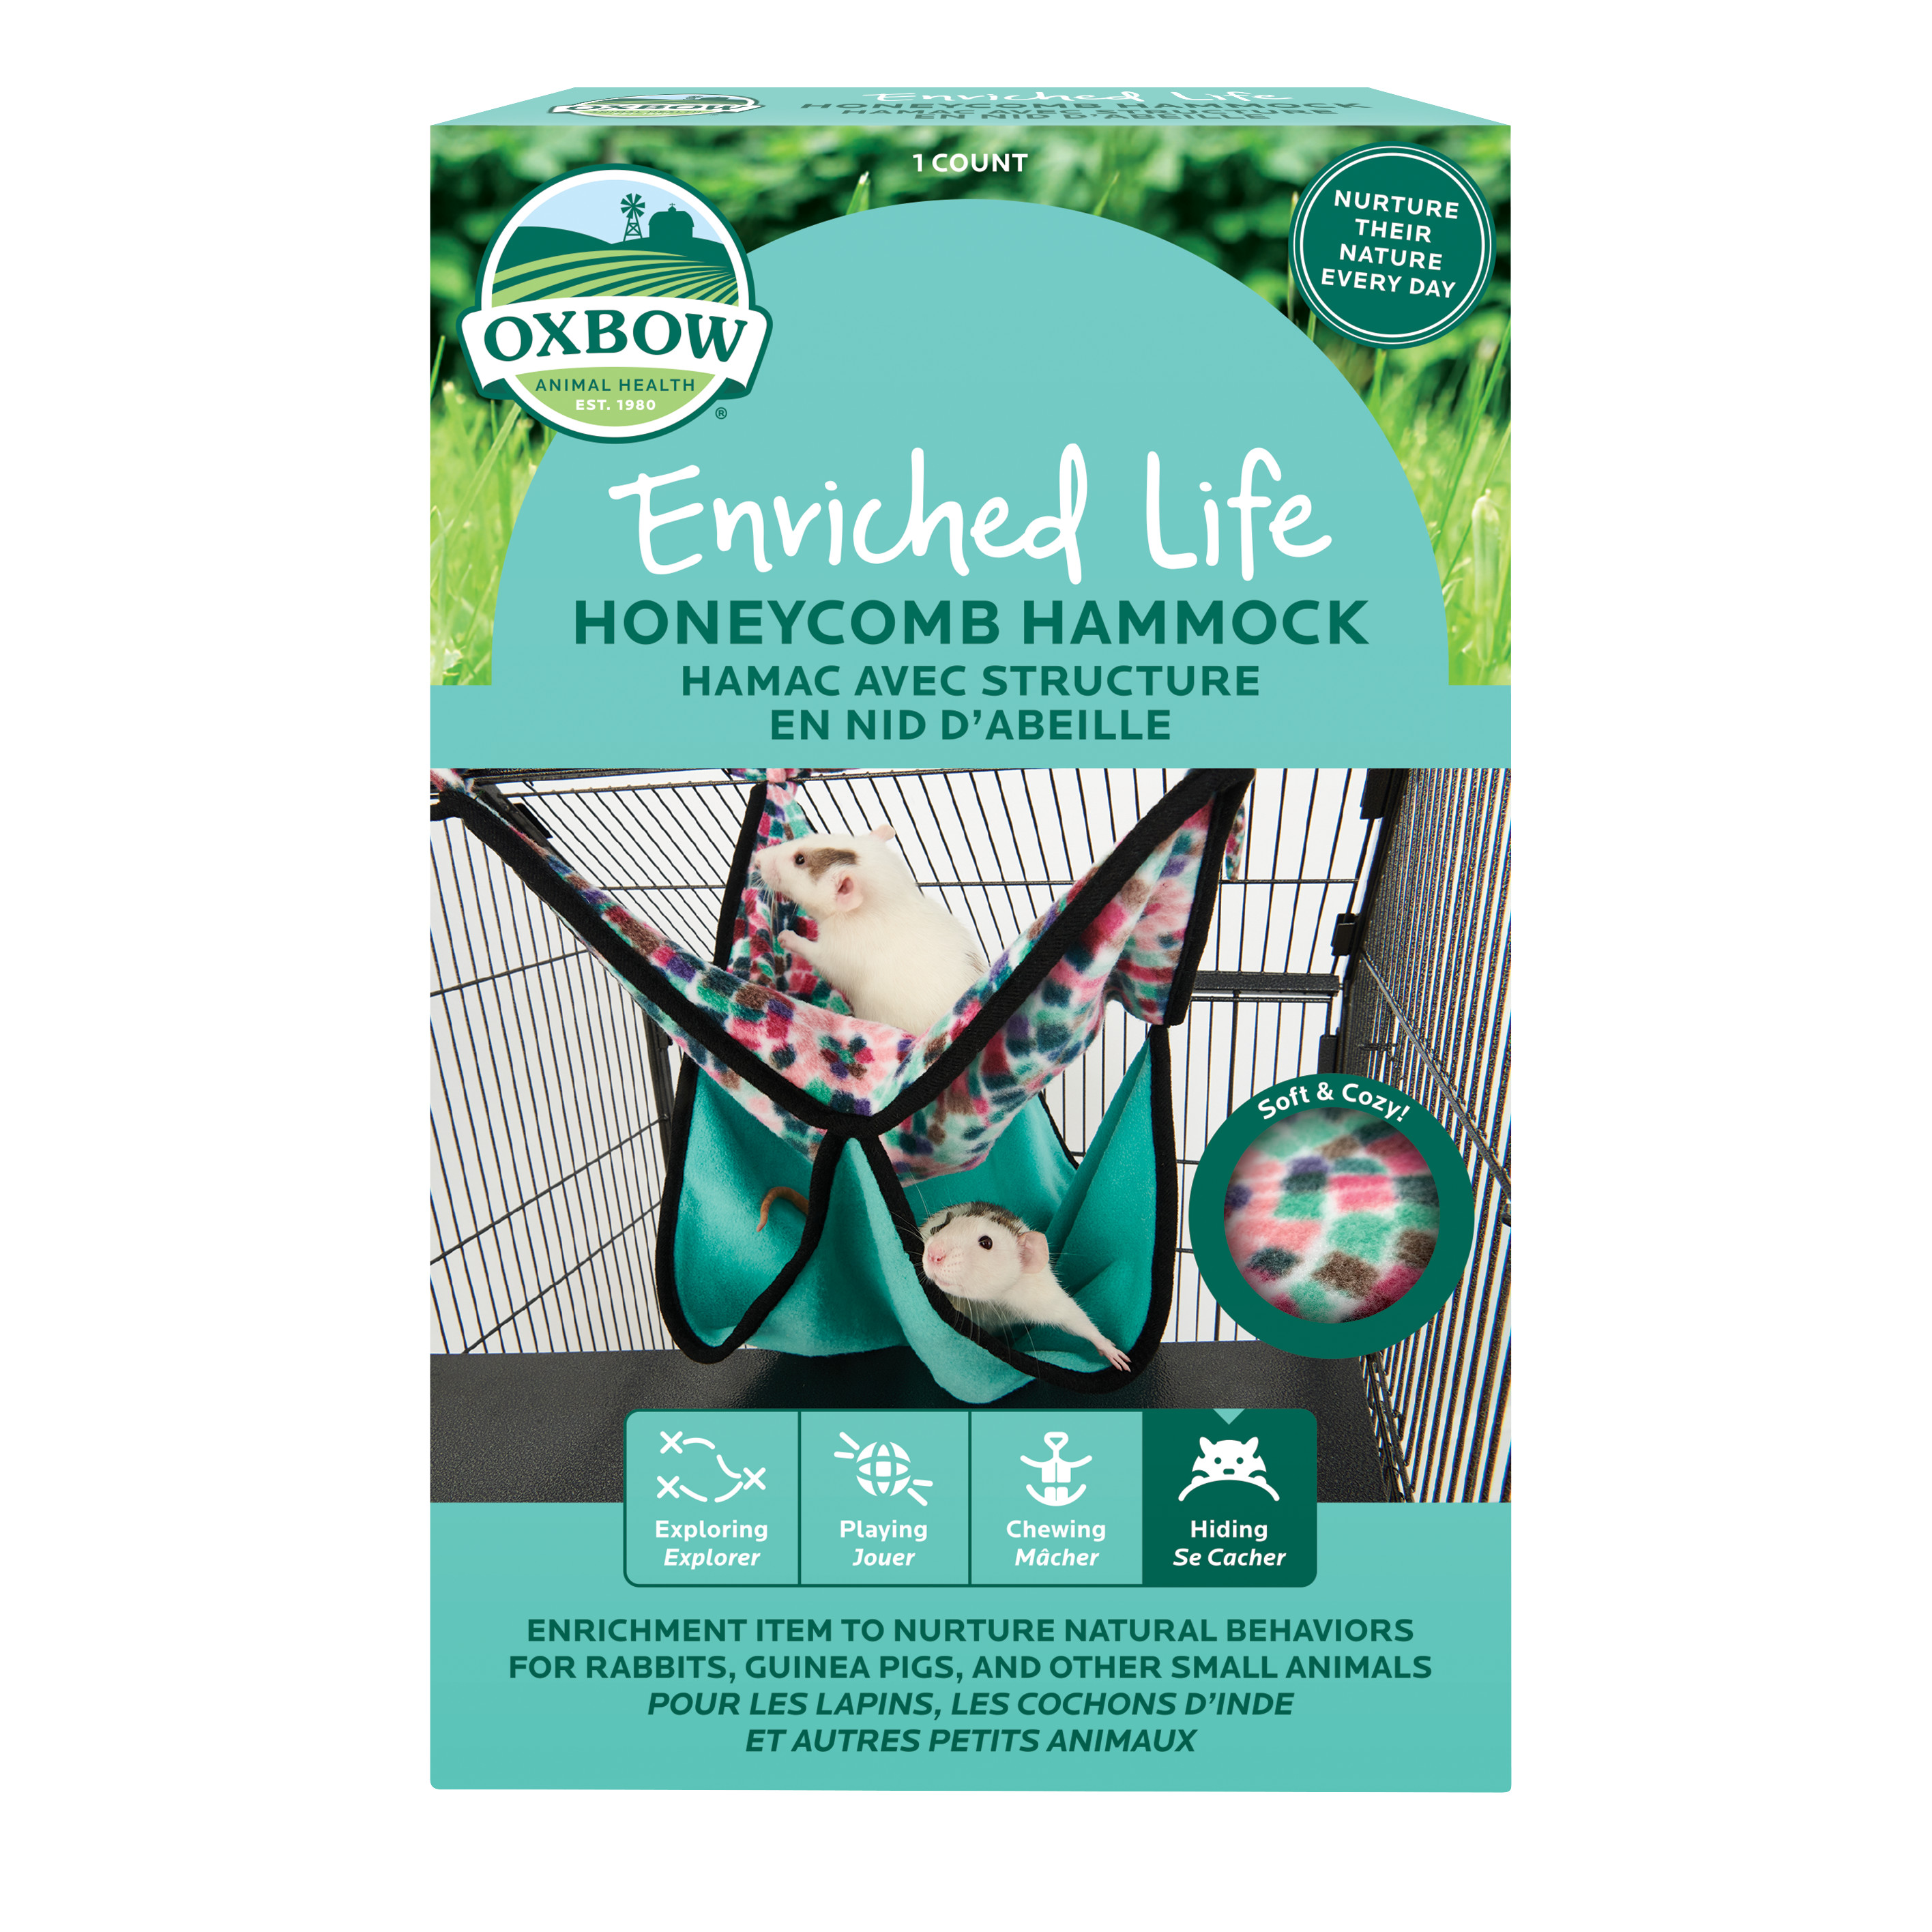 OXBOW Enriched Life Honeycomb Hammock